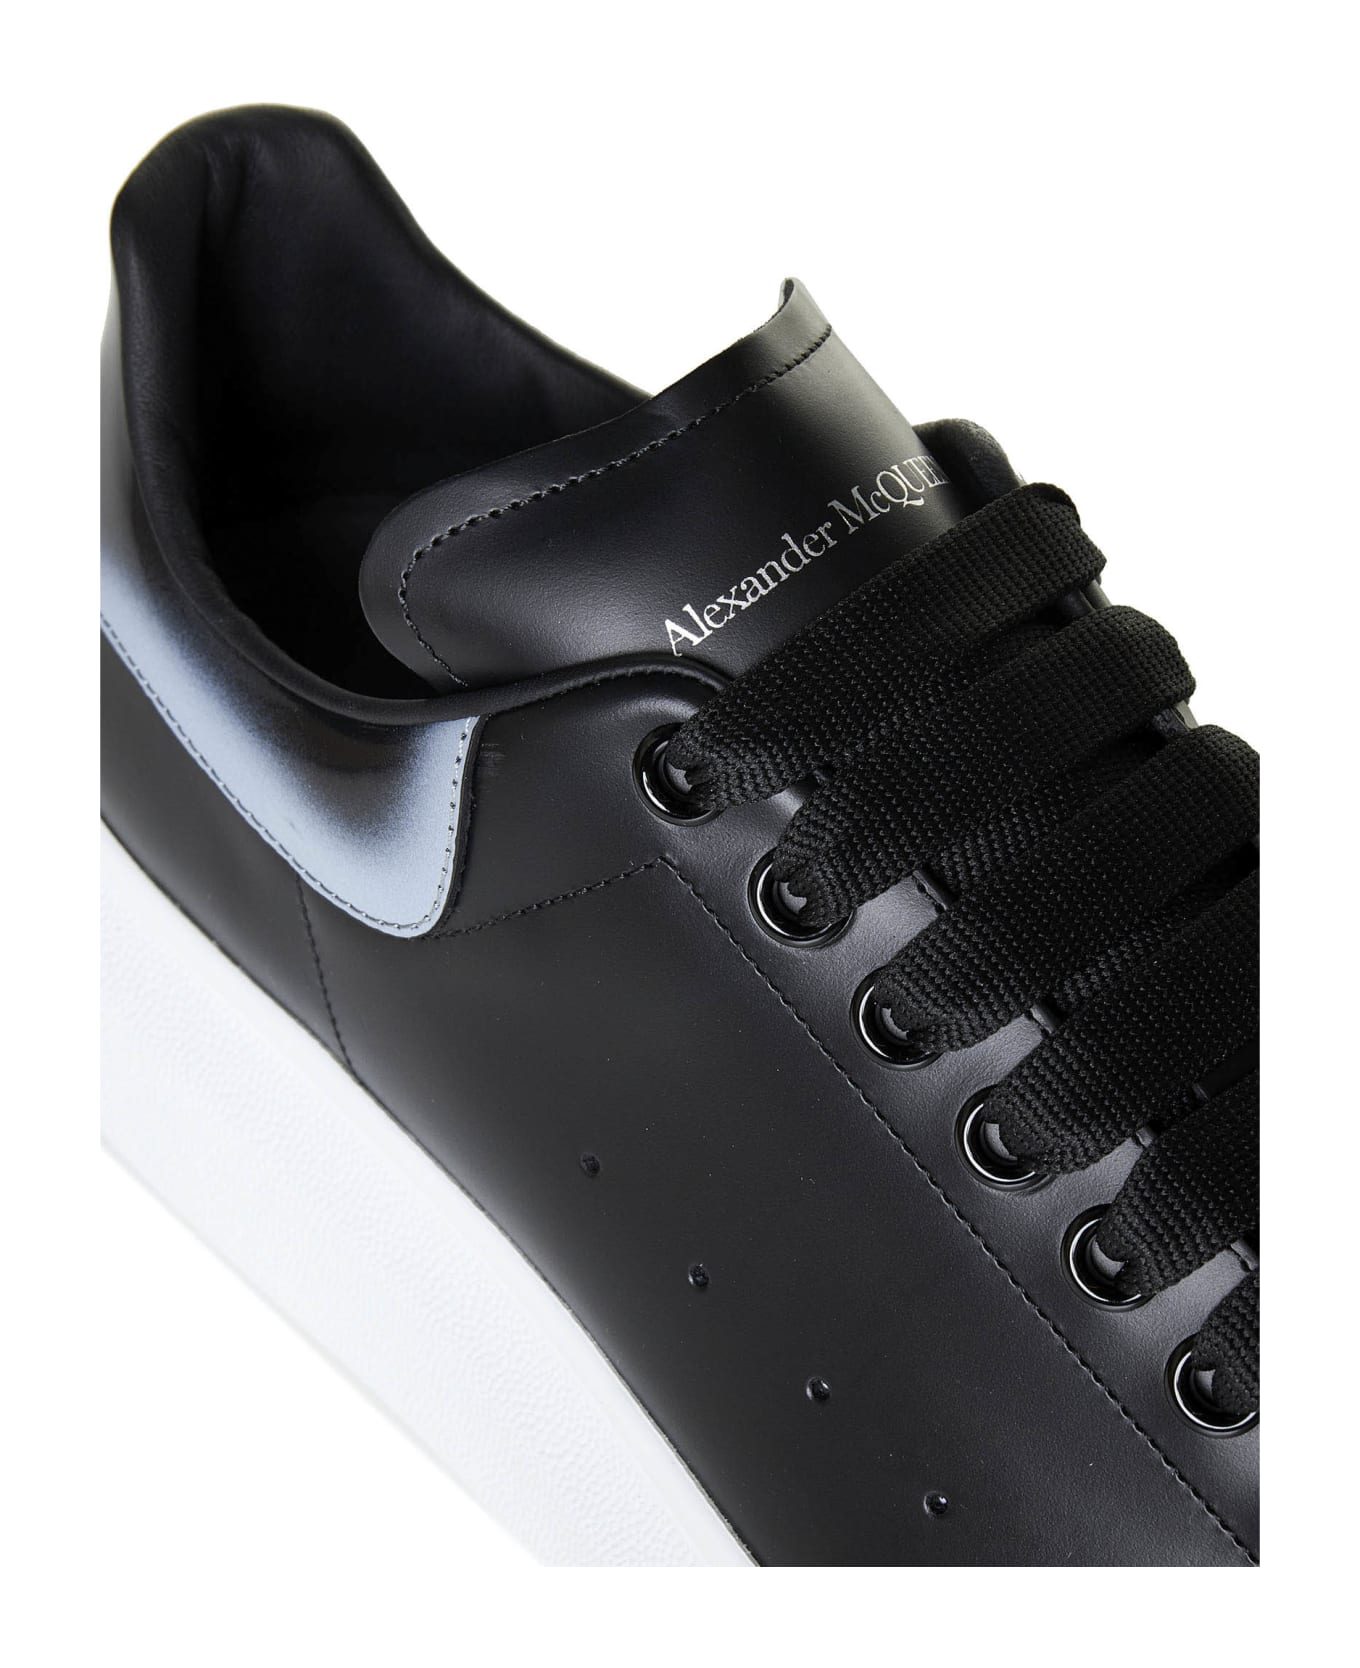 Alexander McQueen Calfskin Sneakers - Black/black/silver